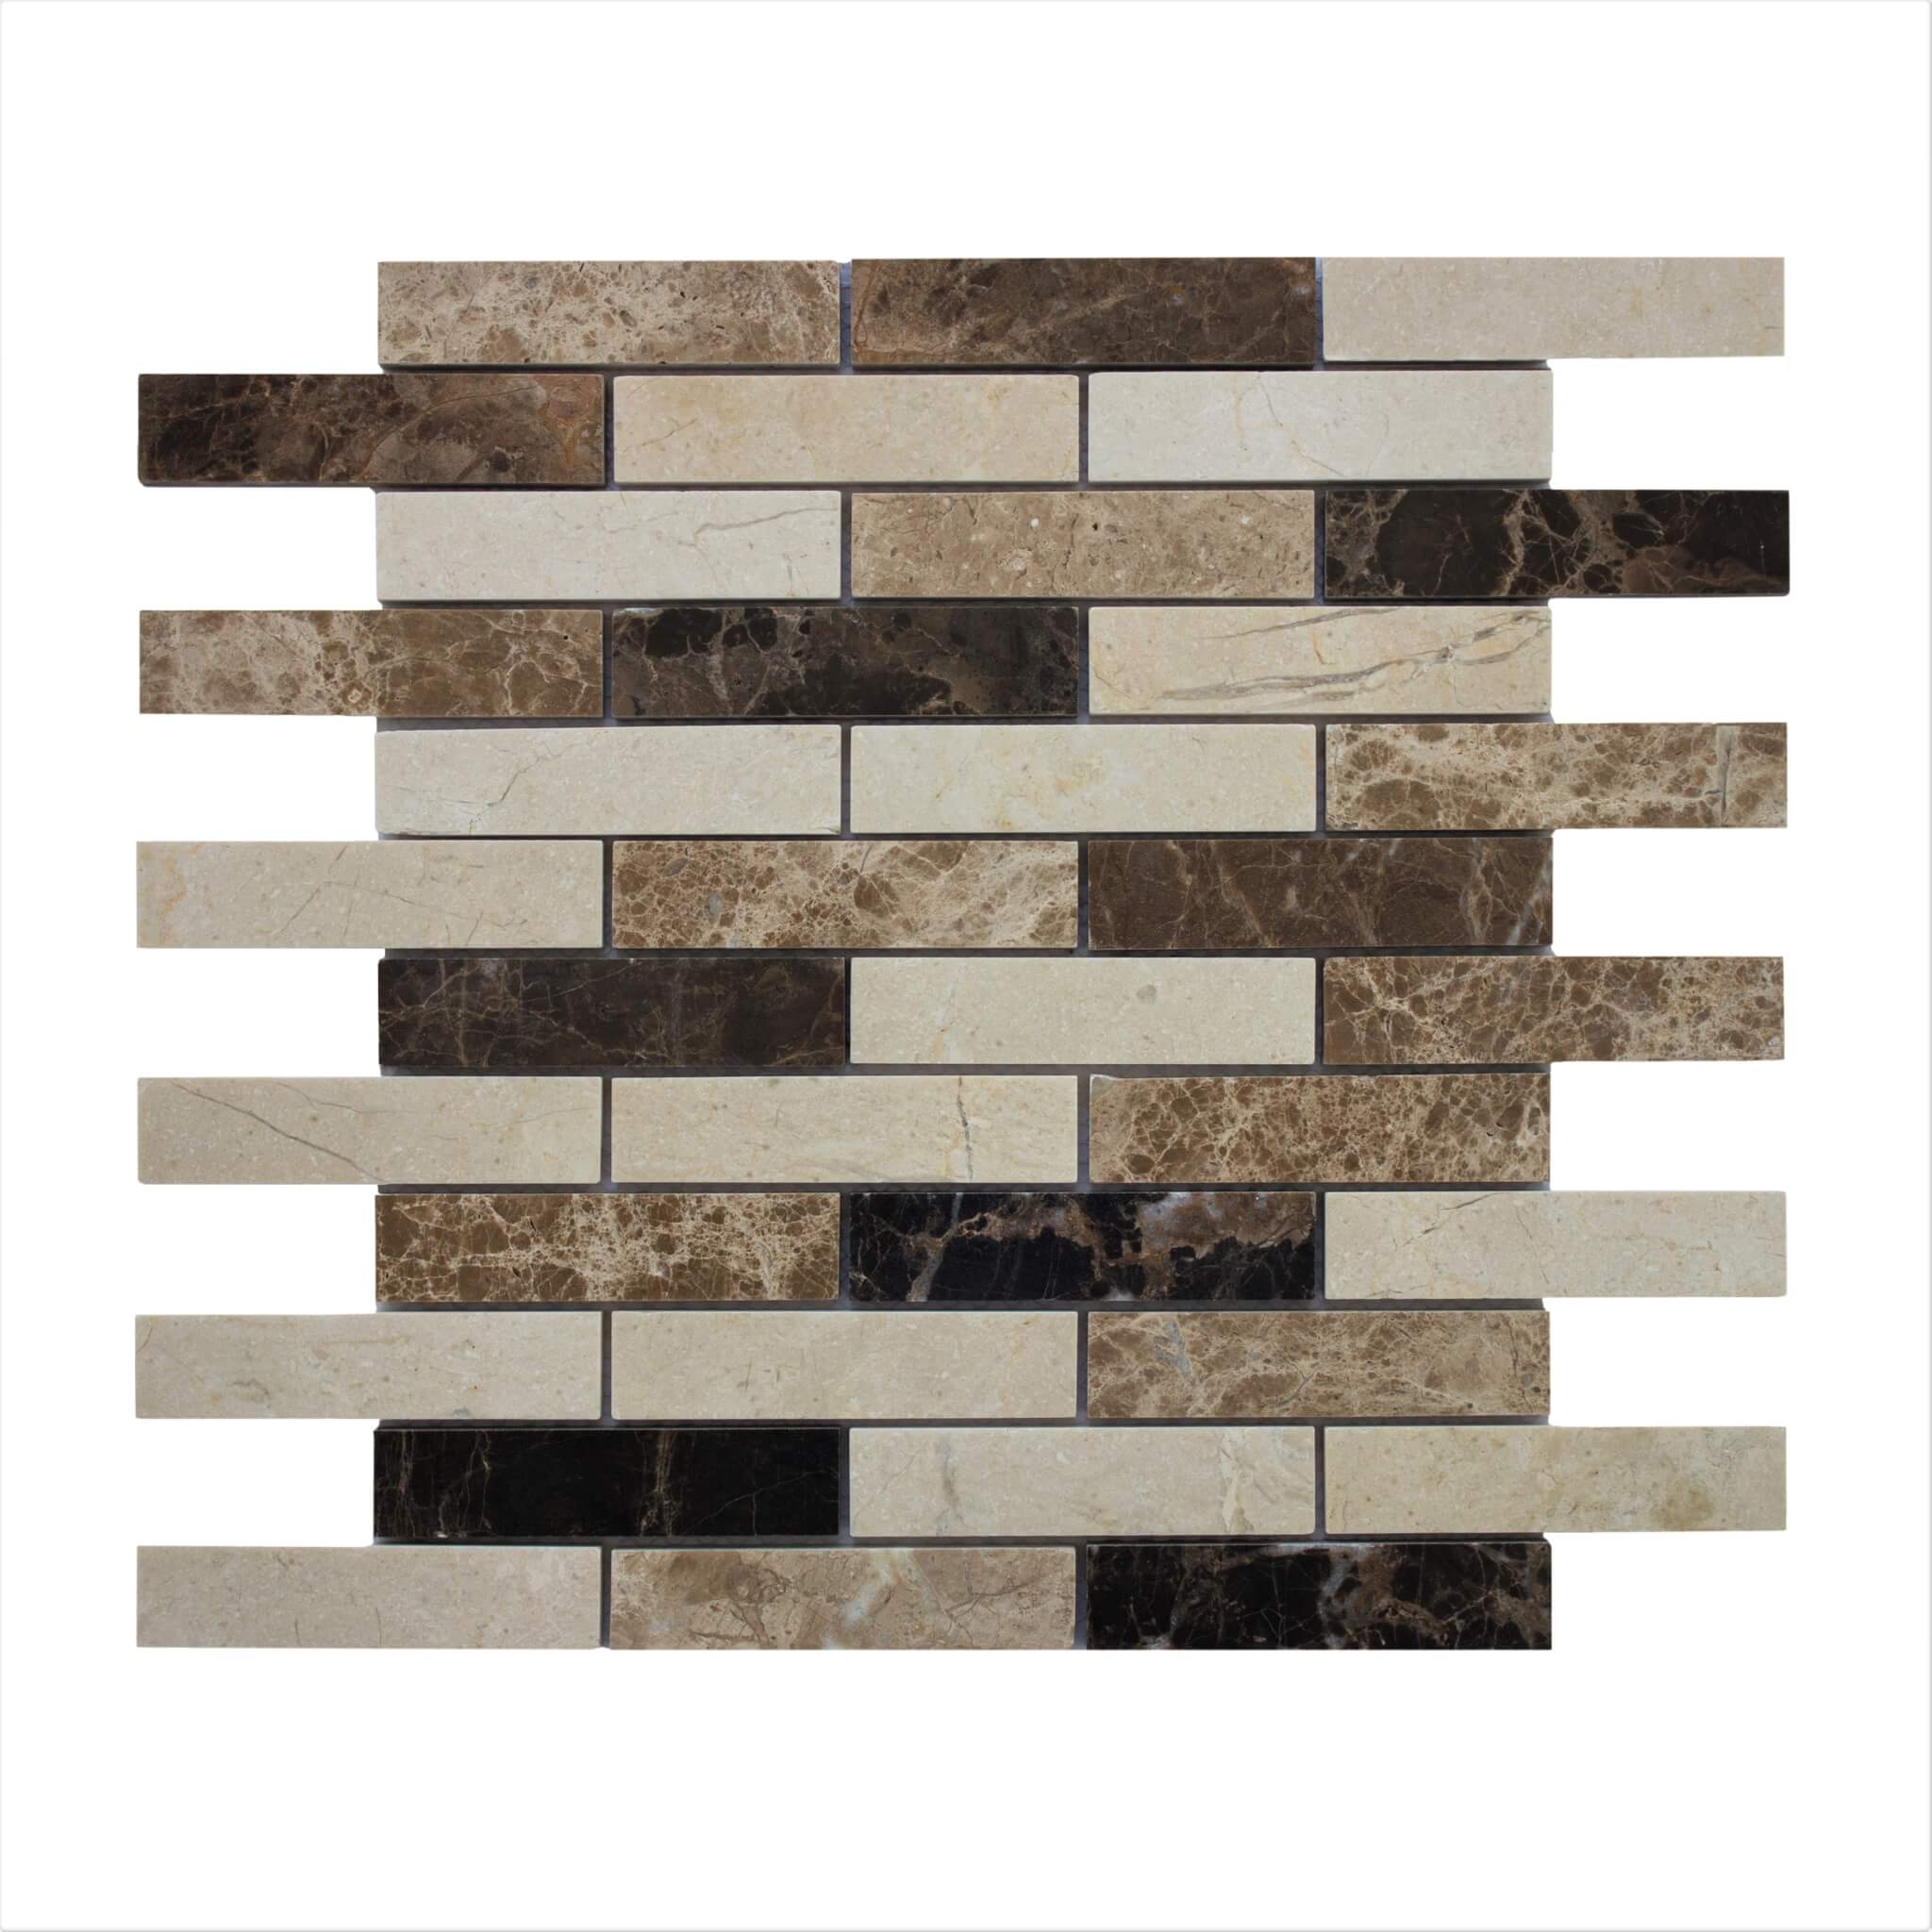 mosaic tiles - 721 | DixieTileShop: Mosaic Tiles, Backsplash Tiles ...